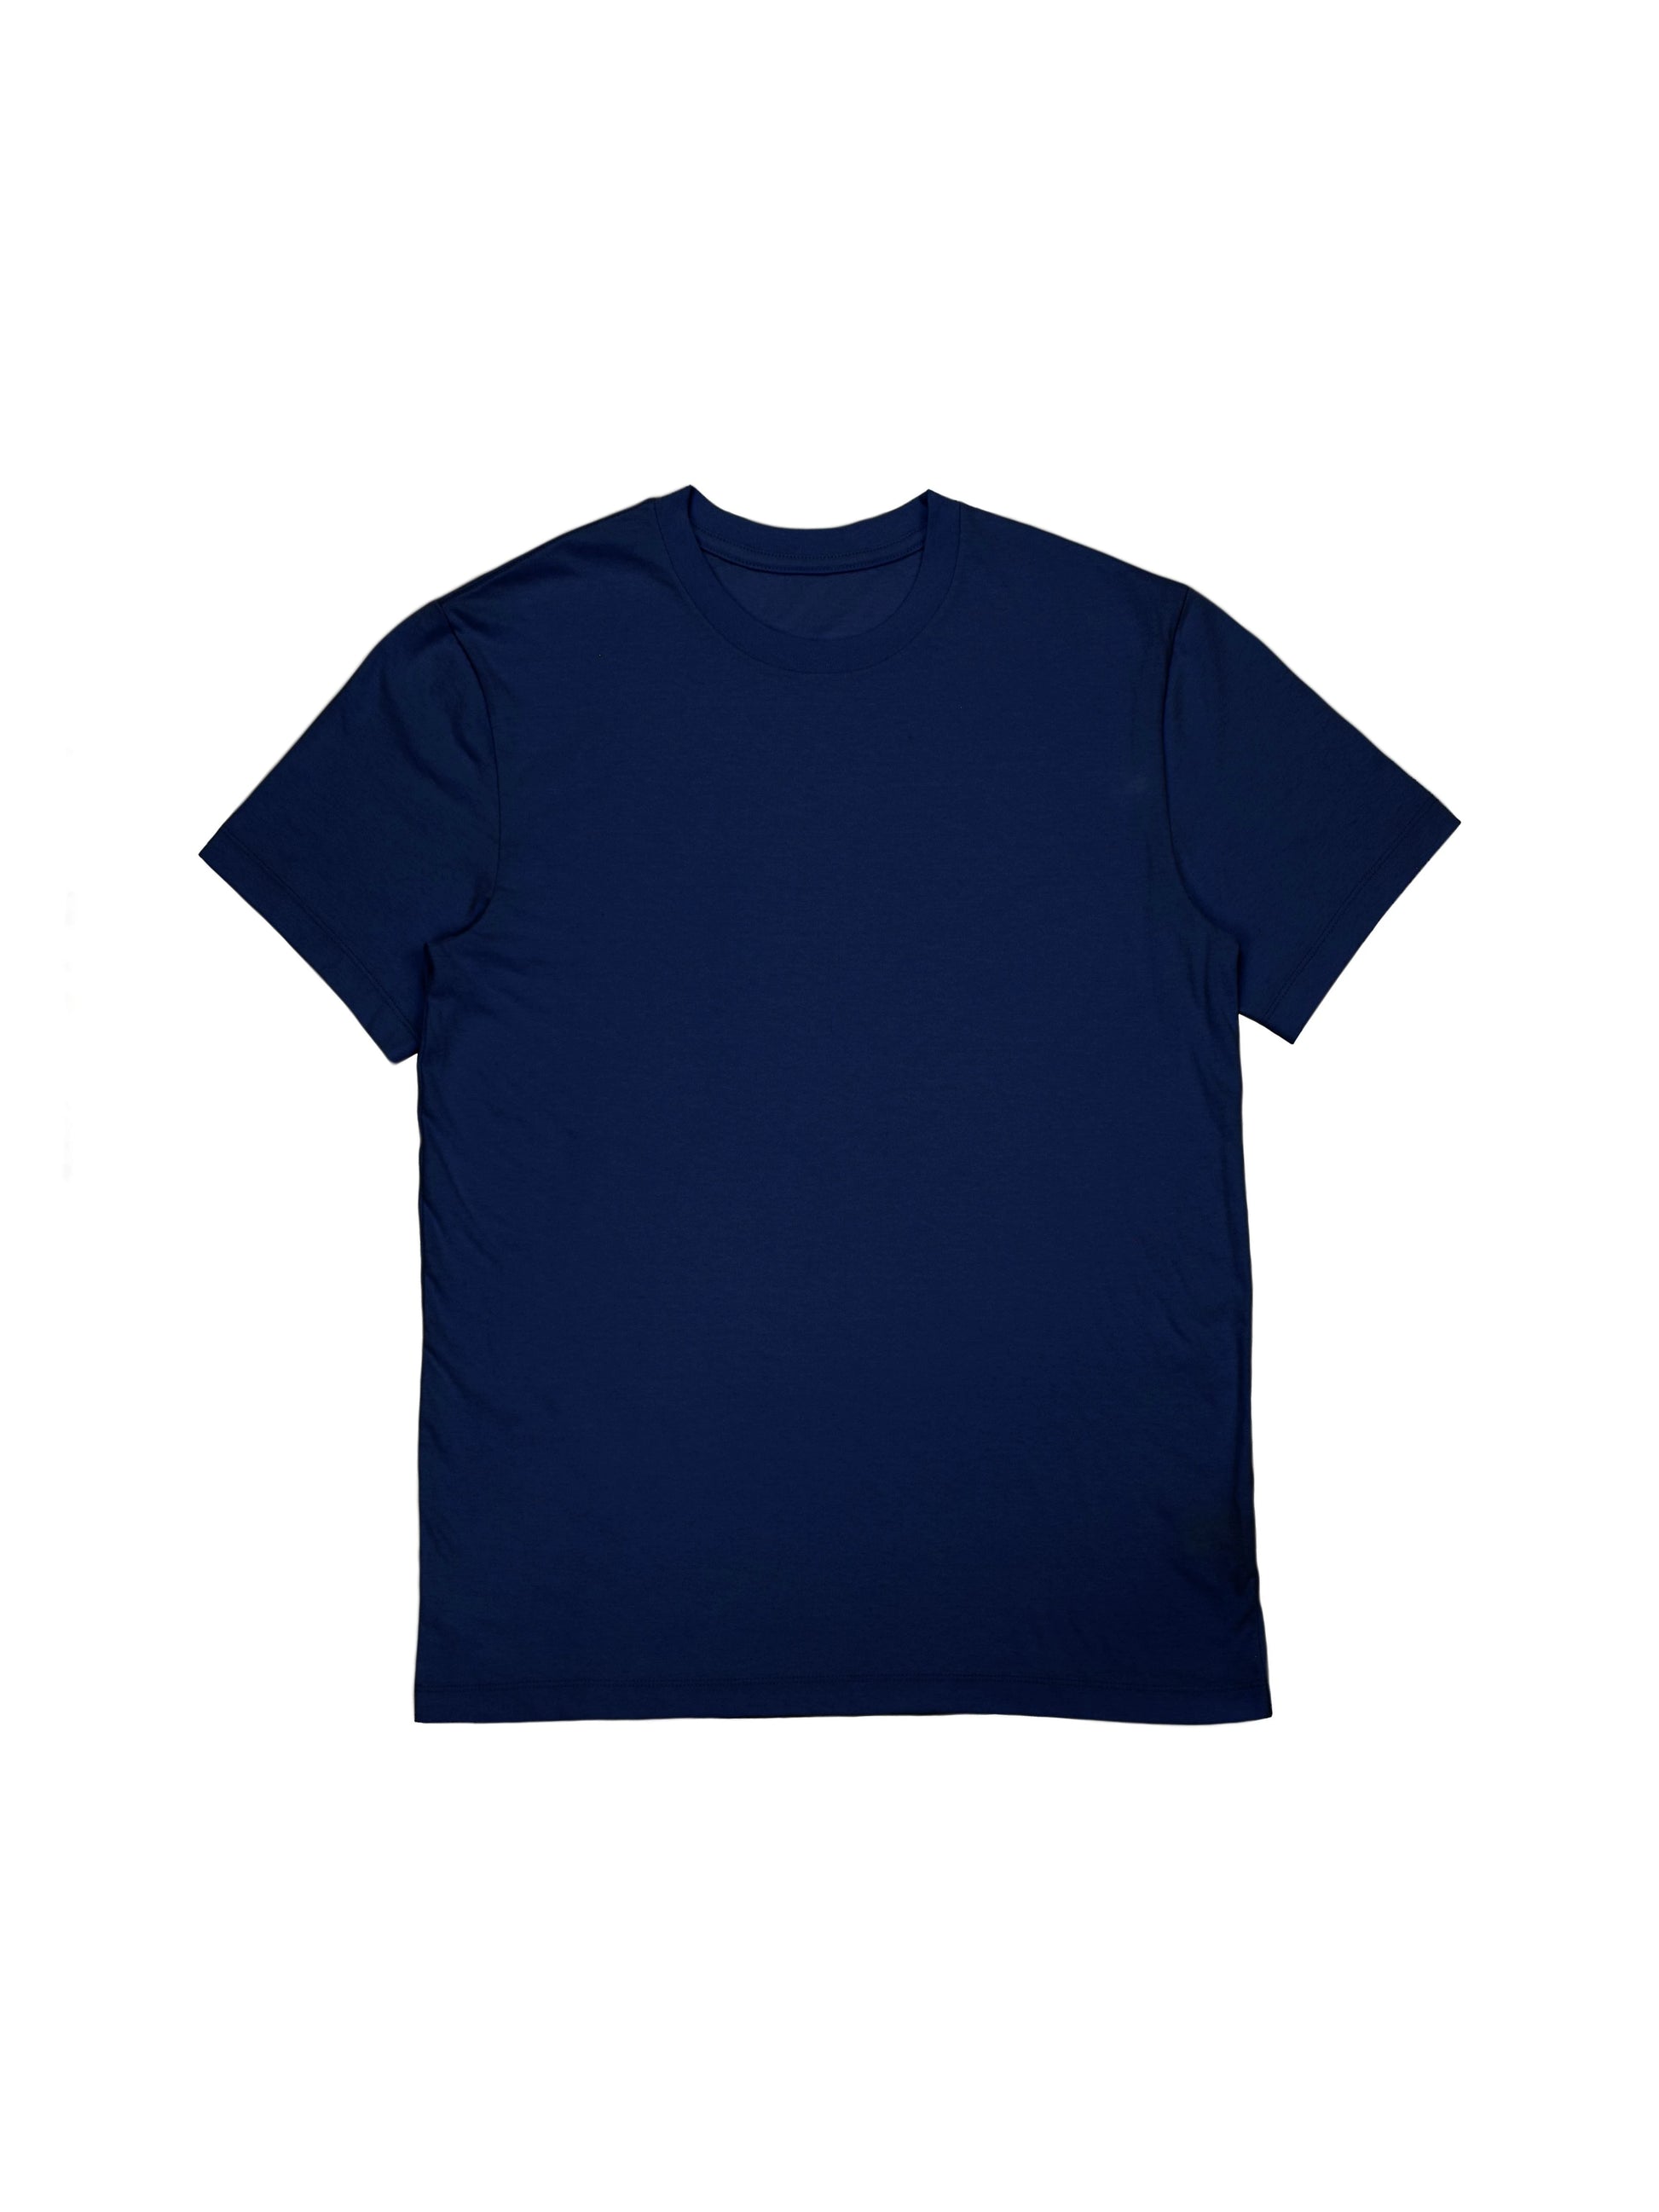 Boxy T-shirt - Navy Blue Cotton